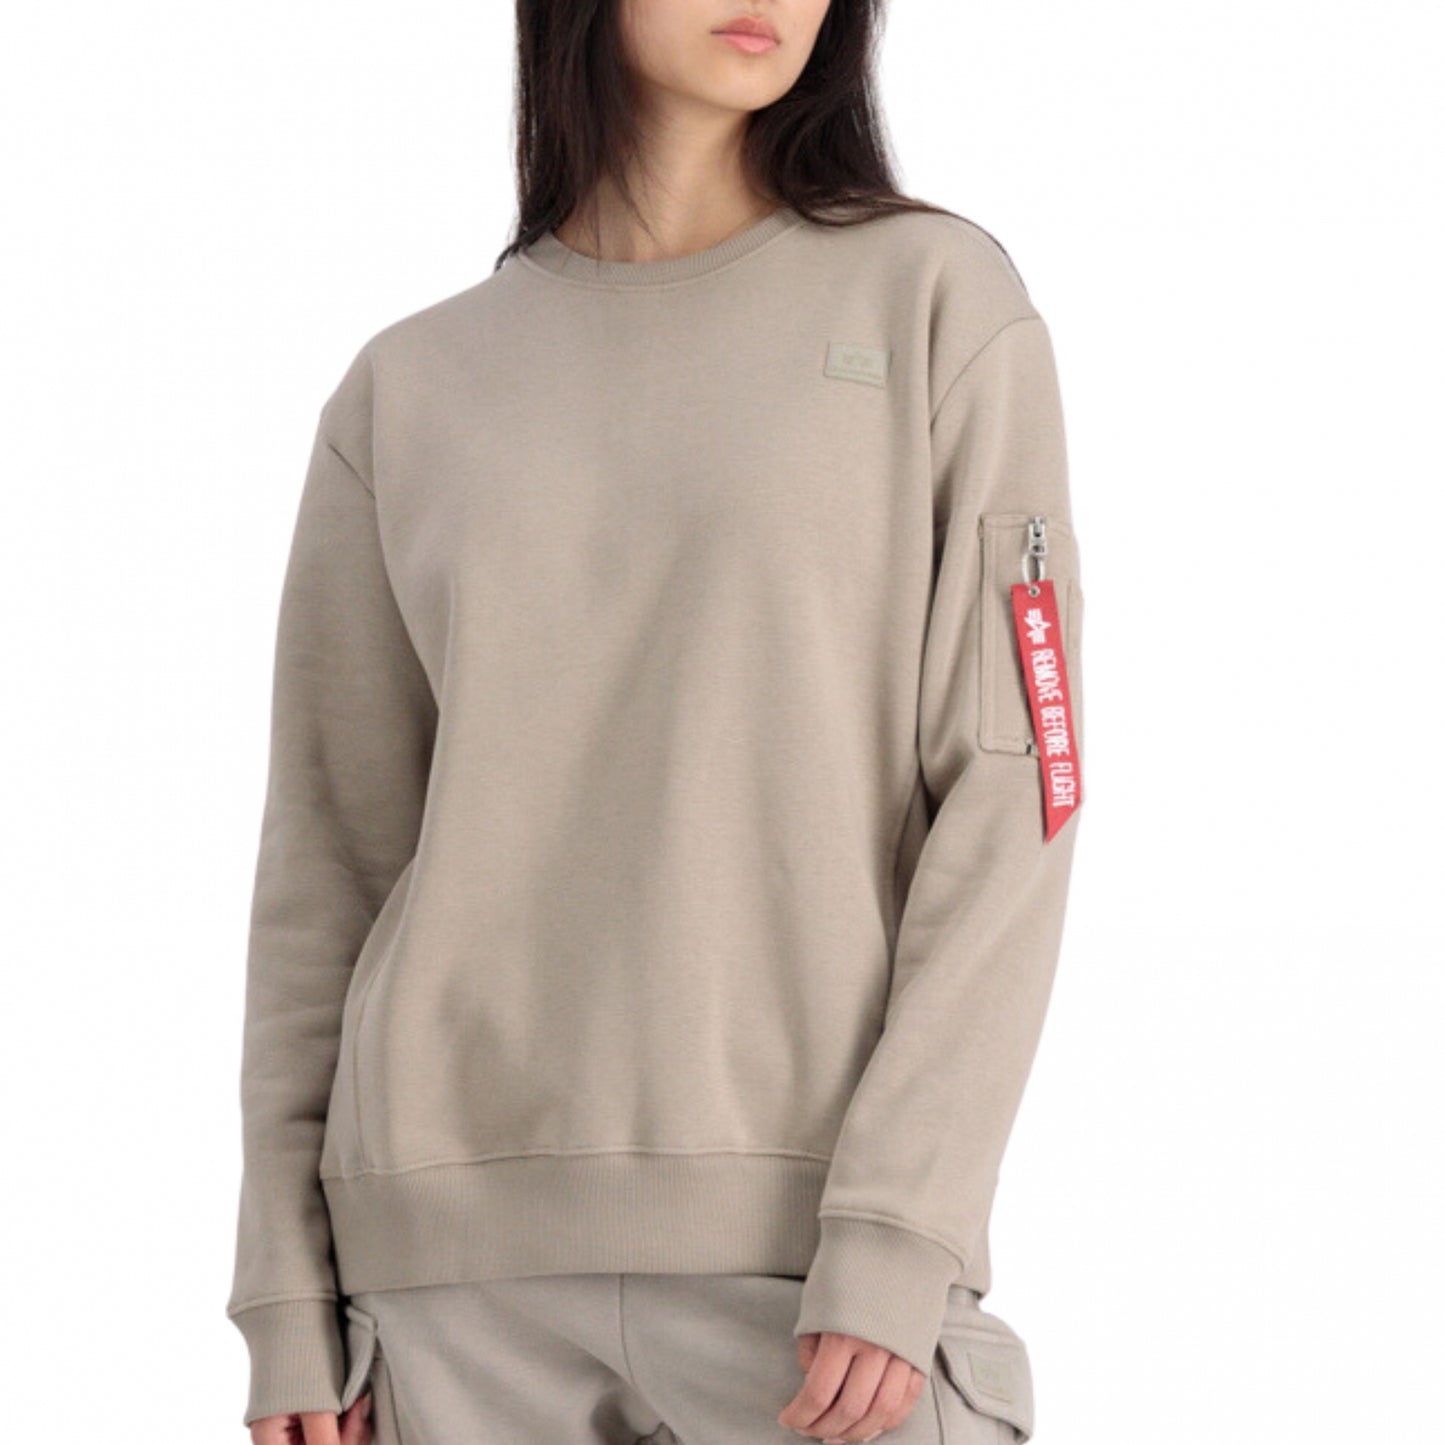 Felpa ALpha X-Fit Label Sweatshirt